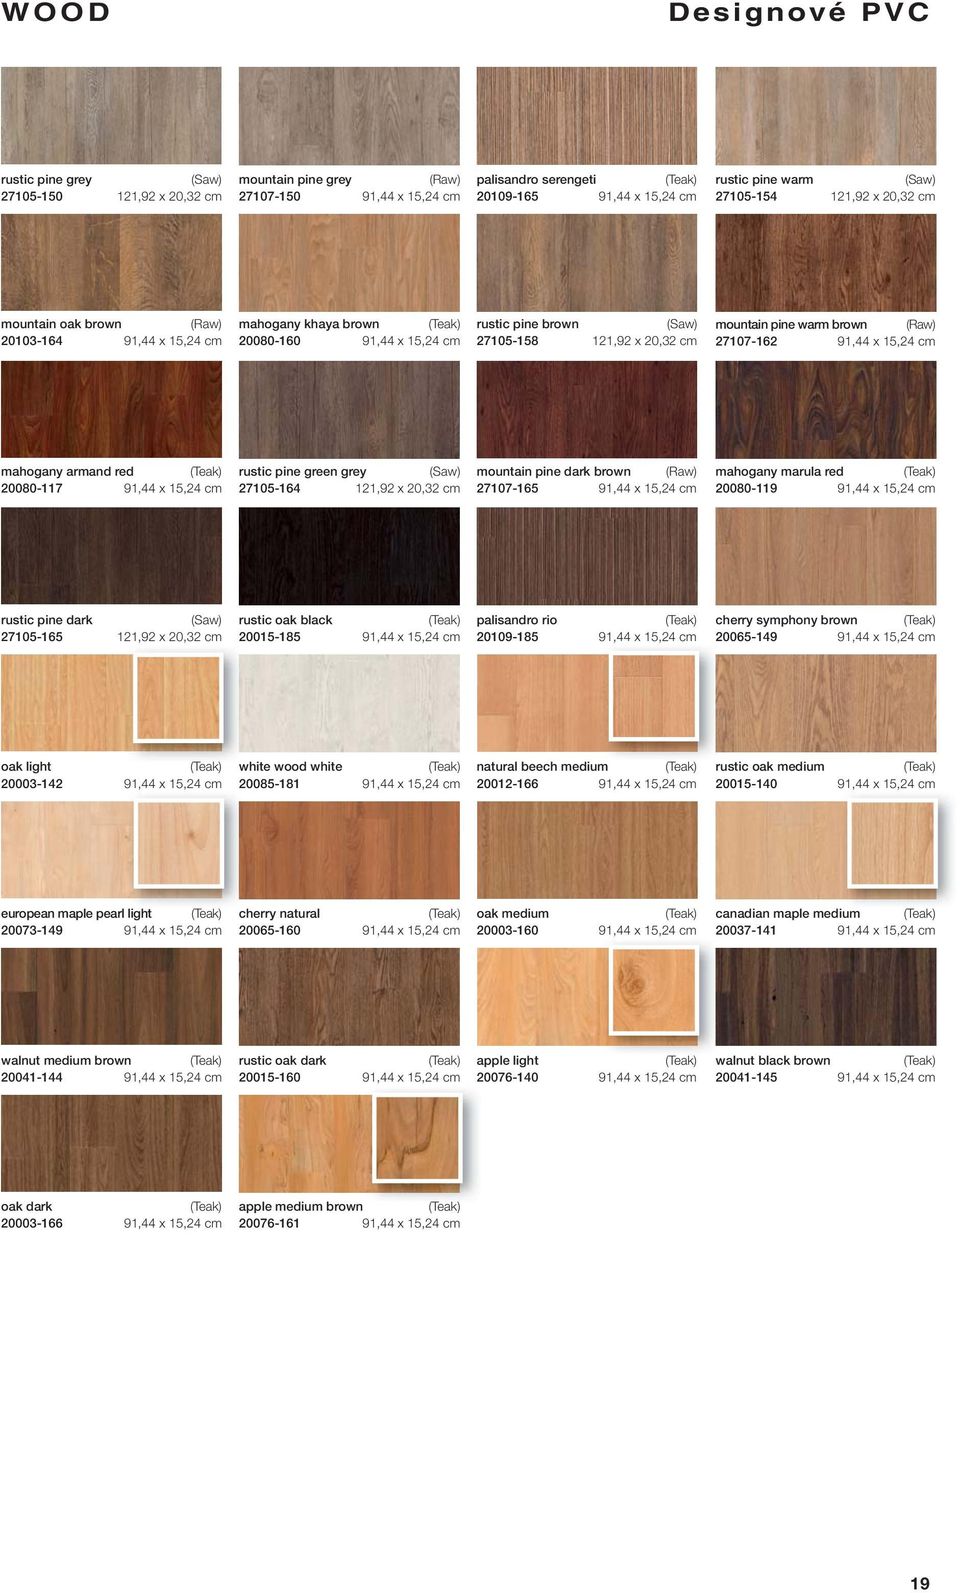 brown (Raw) 27107-162 91,44 x 15,24 cm mahogany armand red 20080-117 91,44 x 15,24 cm rustic pine green grey (Saw) 27105-164 121,92 x 20,32 cm mountain pine dark brown (Raw) 27107-165 91,44 x 15,24